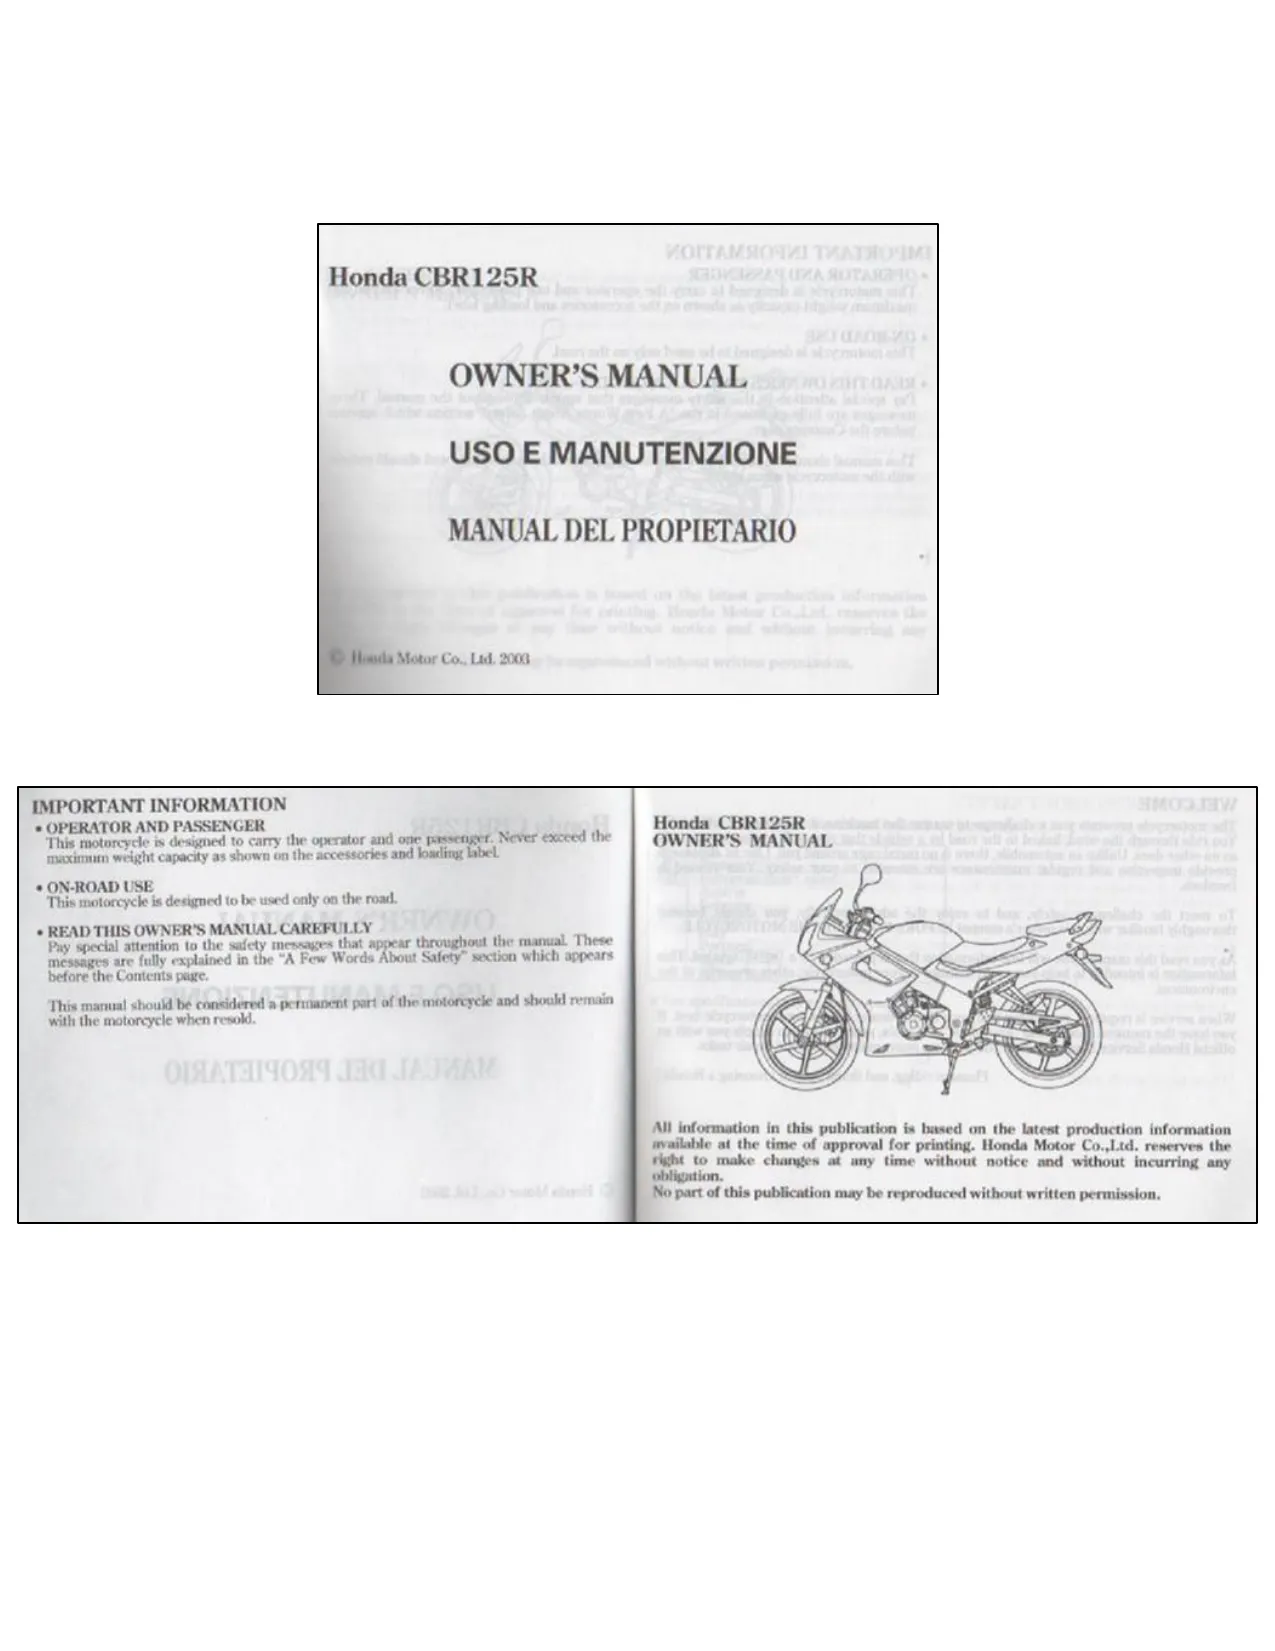 Honda CBR125R service manual Preview image 2